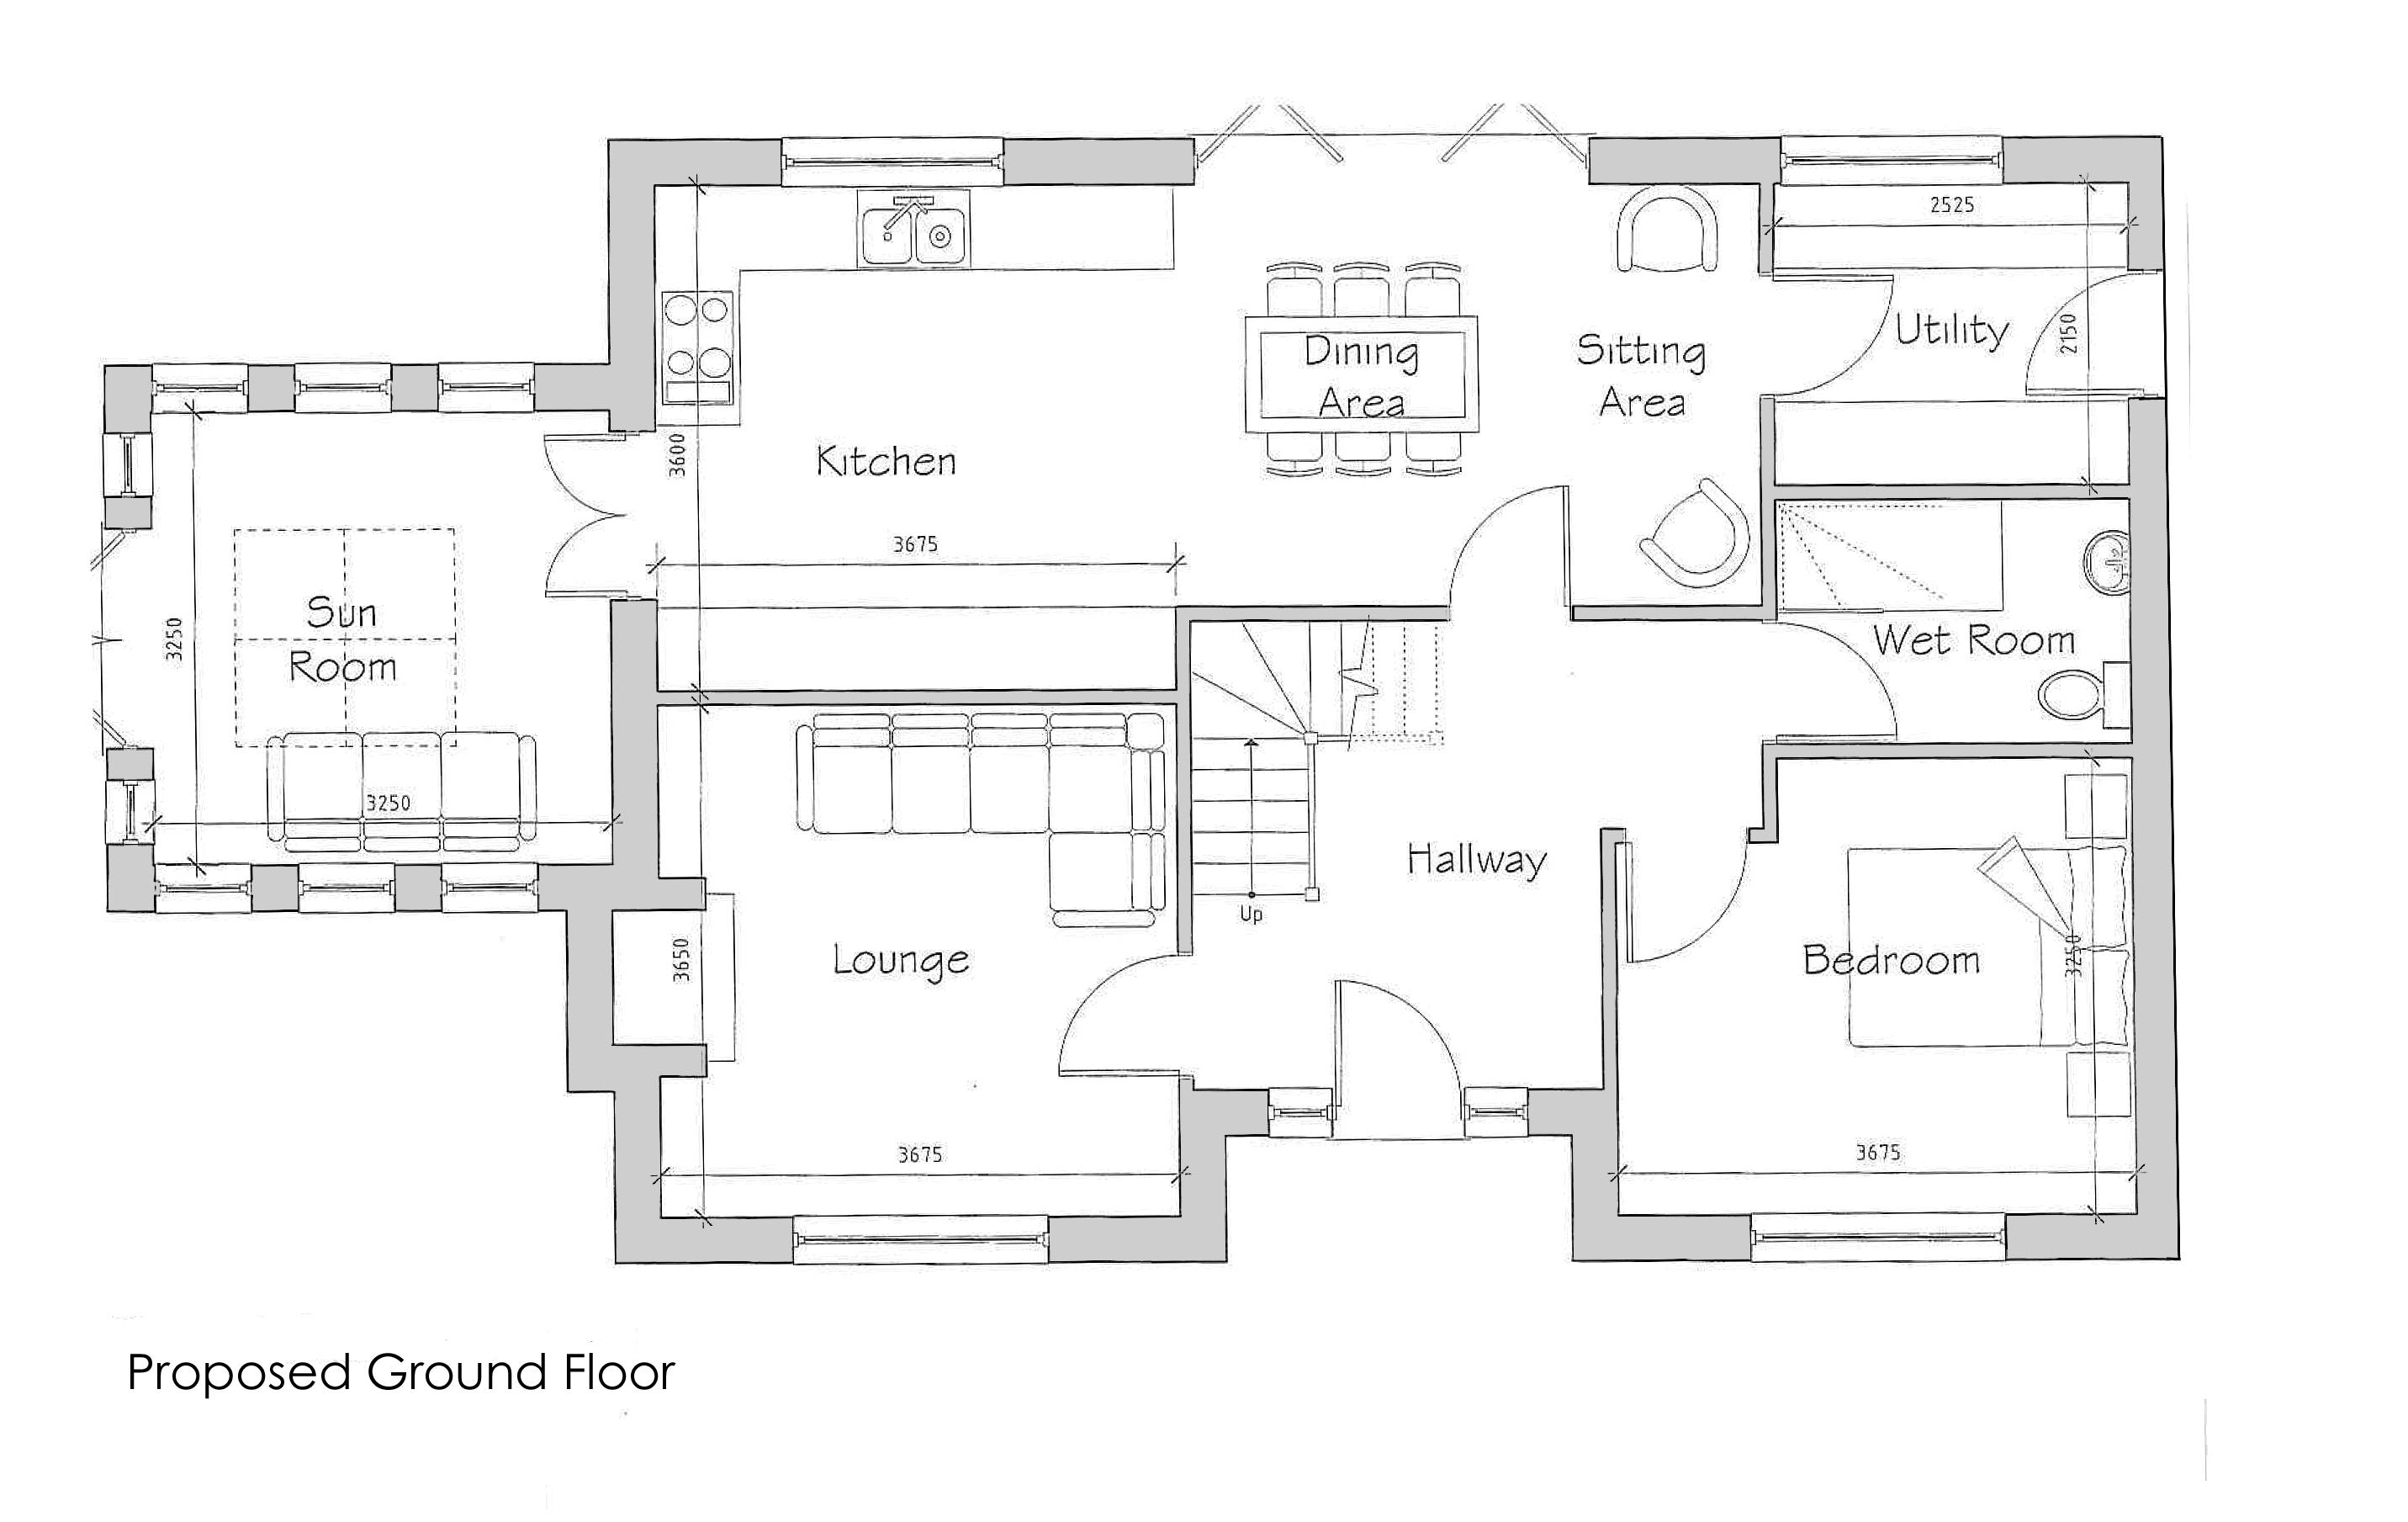 Proposed Ground Floor